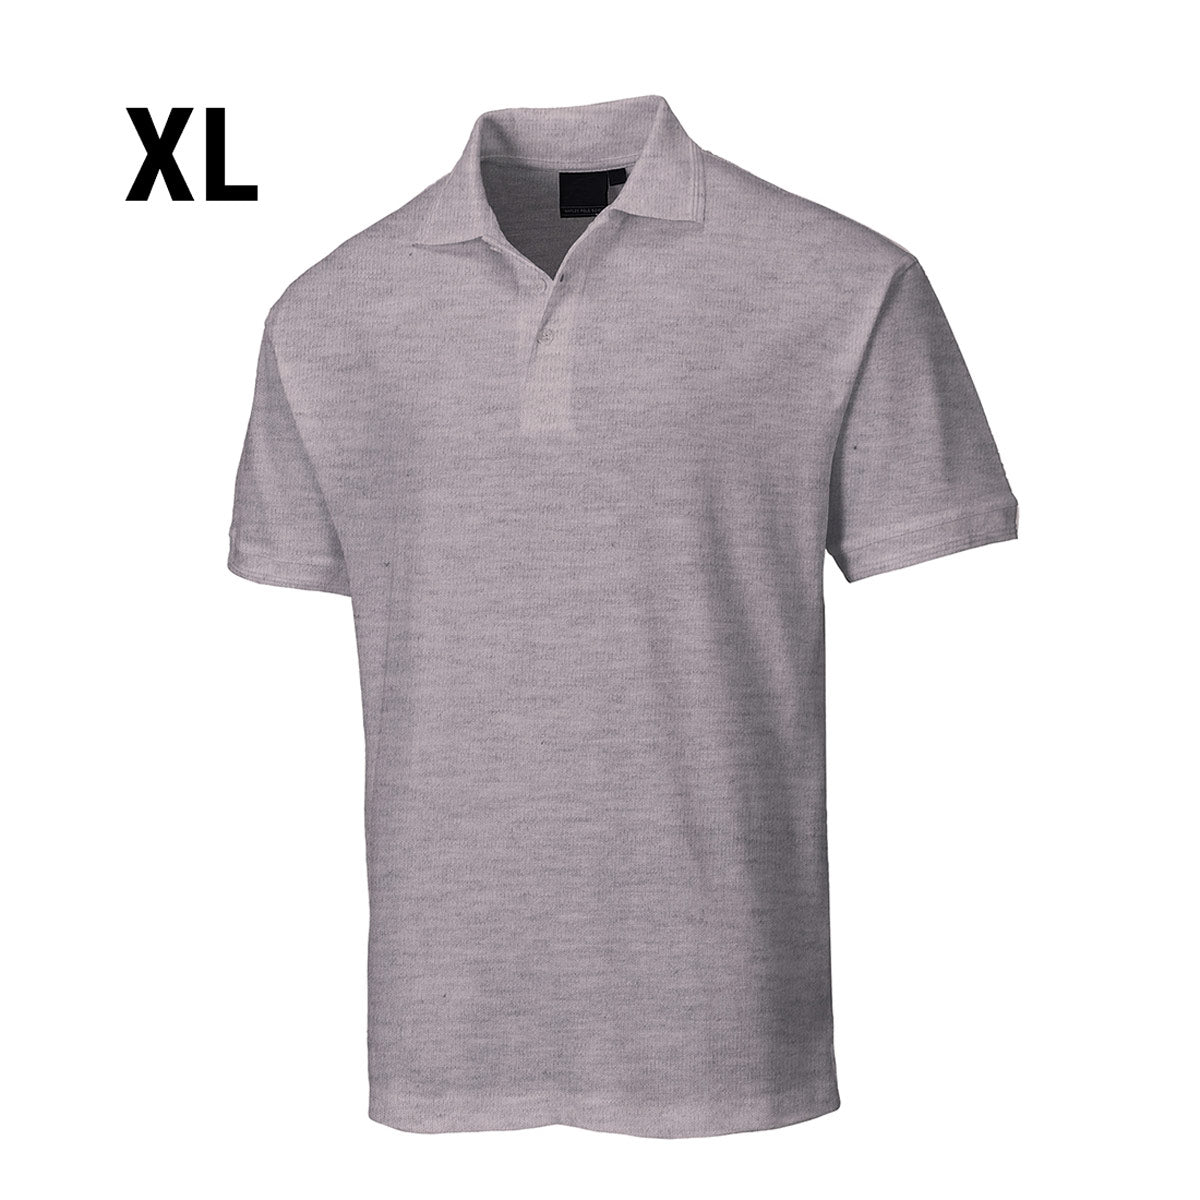 Polo shirt til mænd - Grå - Størrelse: XL